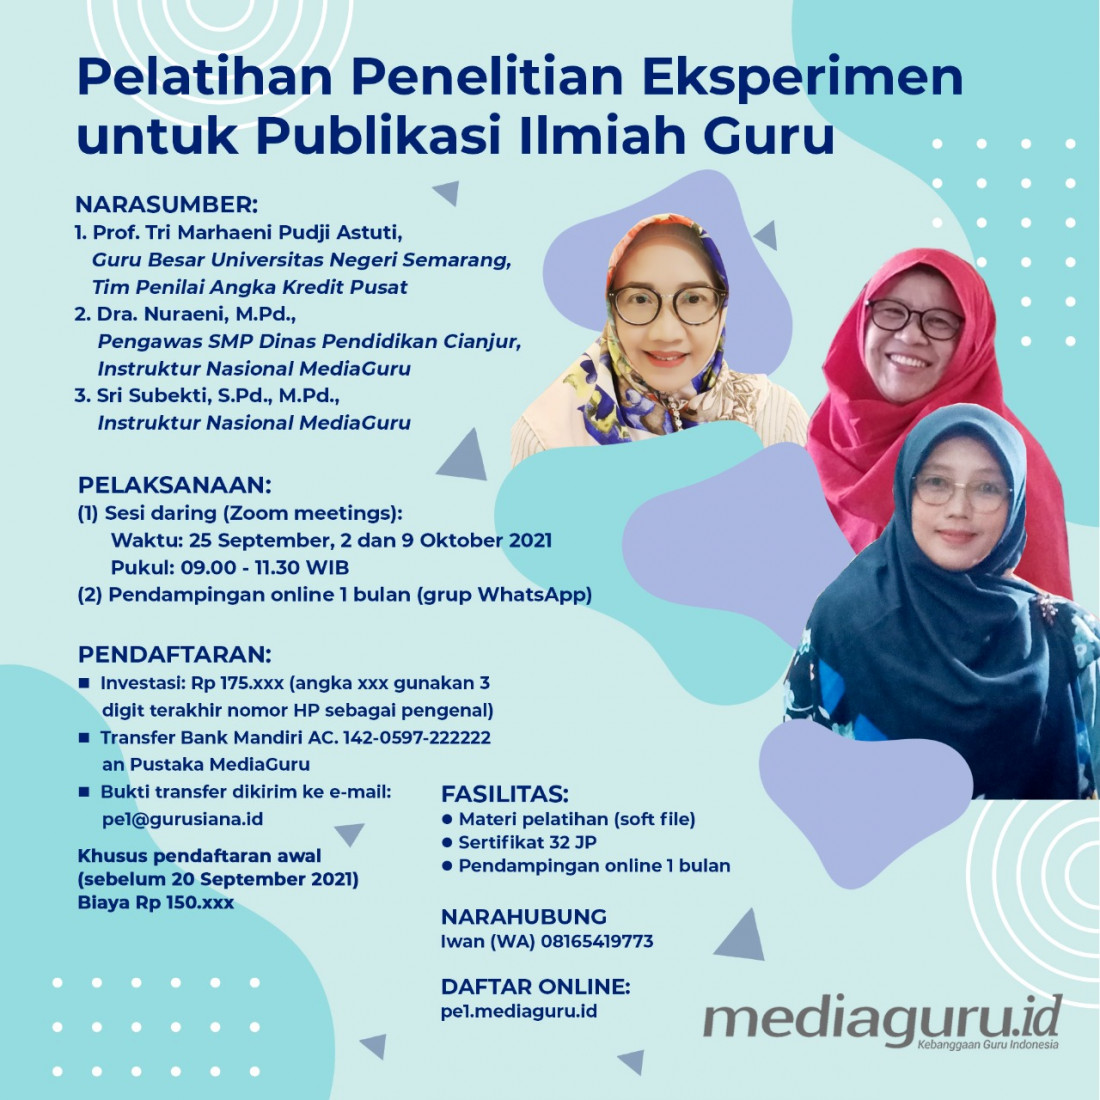 Pelatihan Penelitian Eksperiman untuk Publikasi Ilmiah Guru (25 September - 9 Oktober 2021)